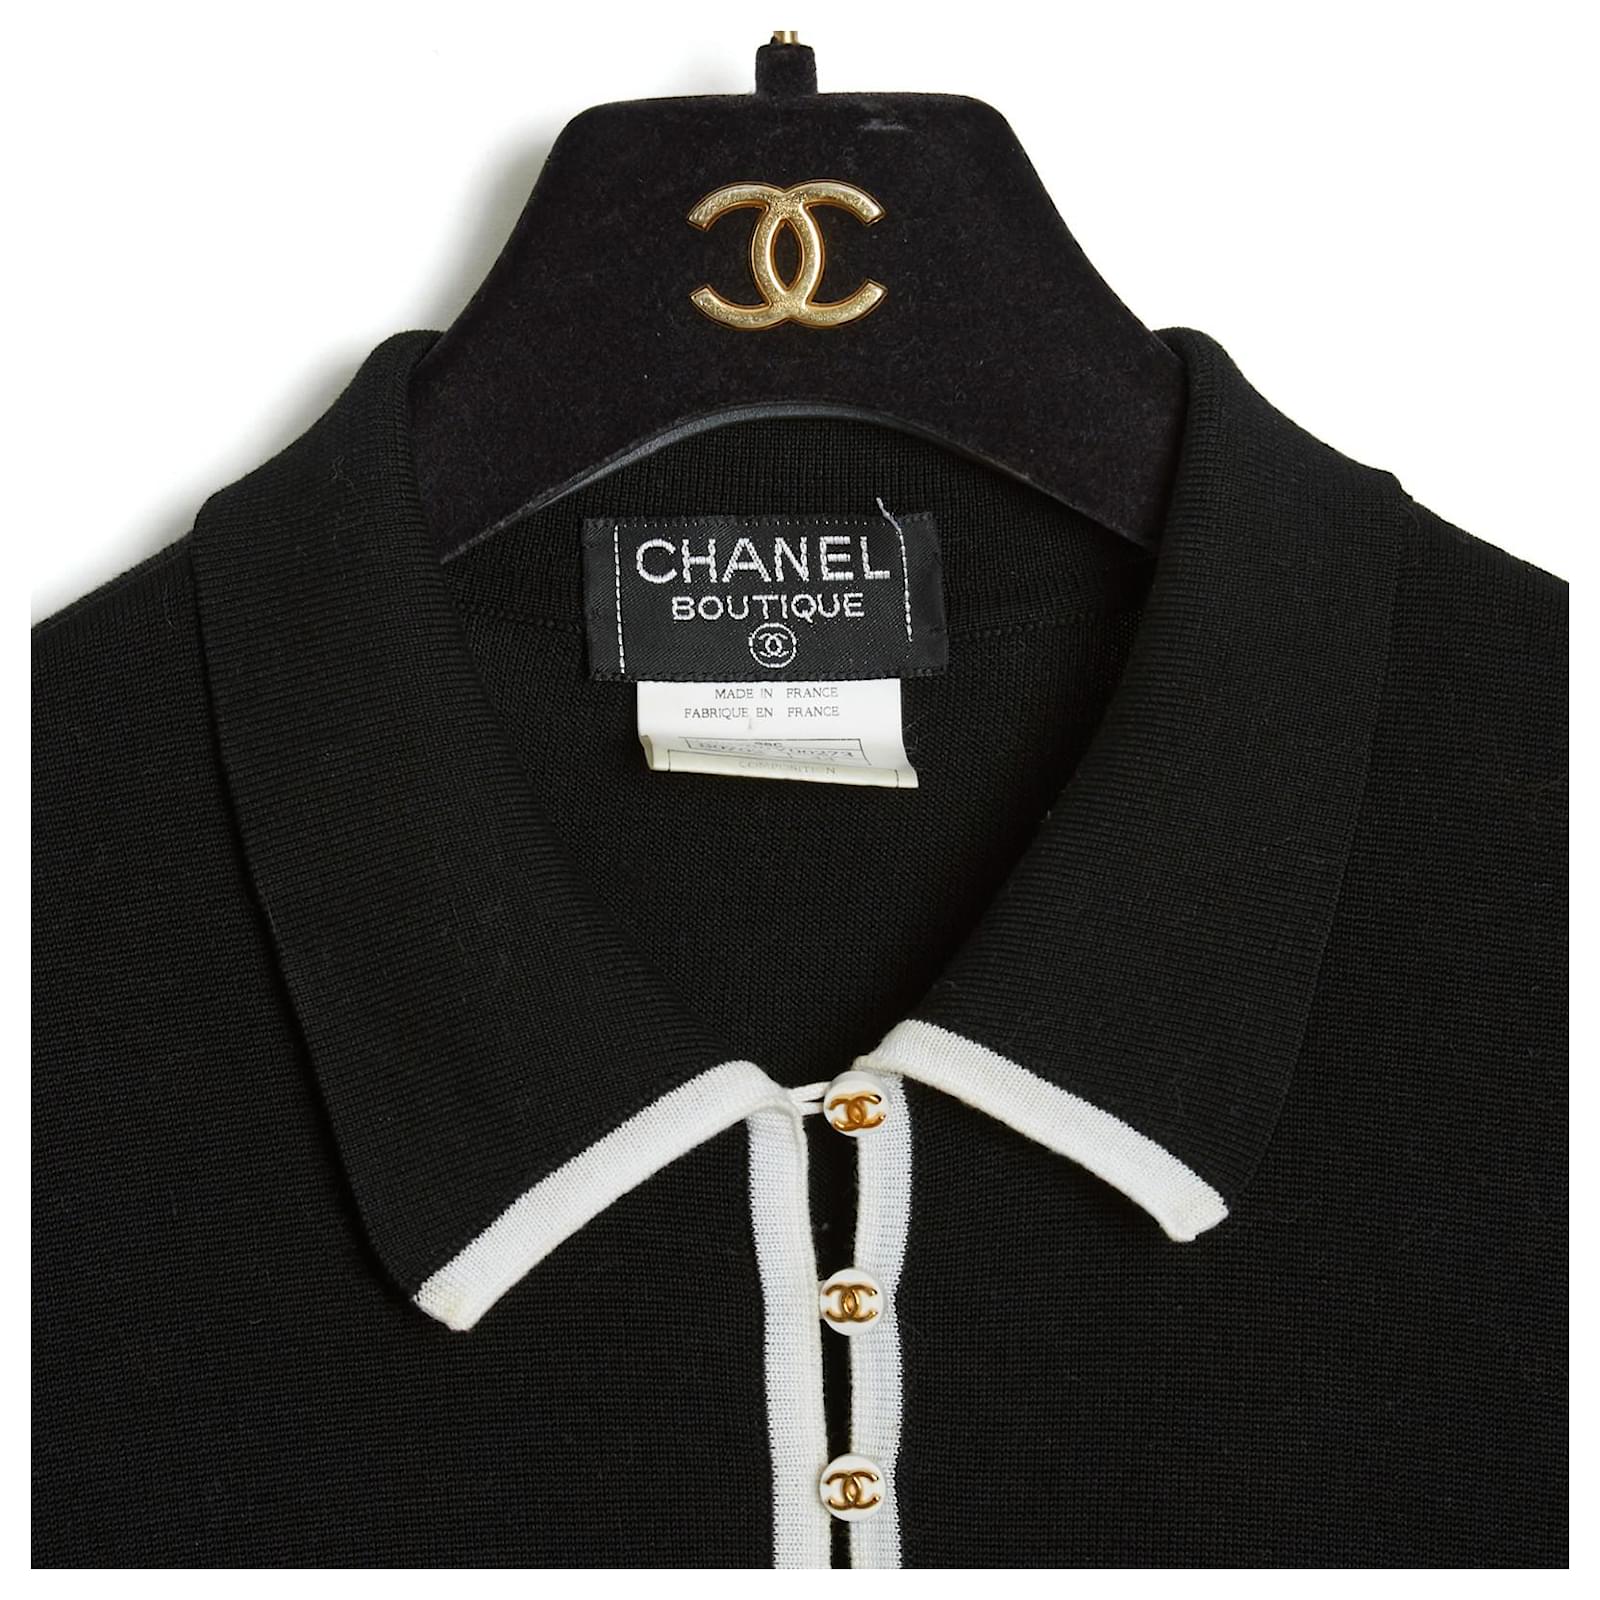 Tops Chanel 98C Top Polo EN36/40 Black Ivory Size 36 FR